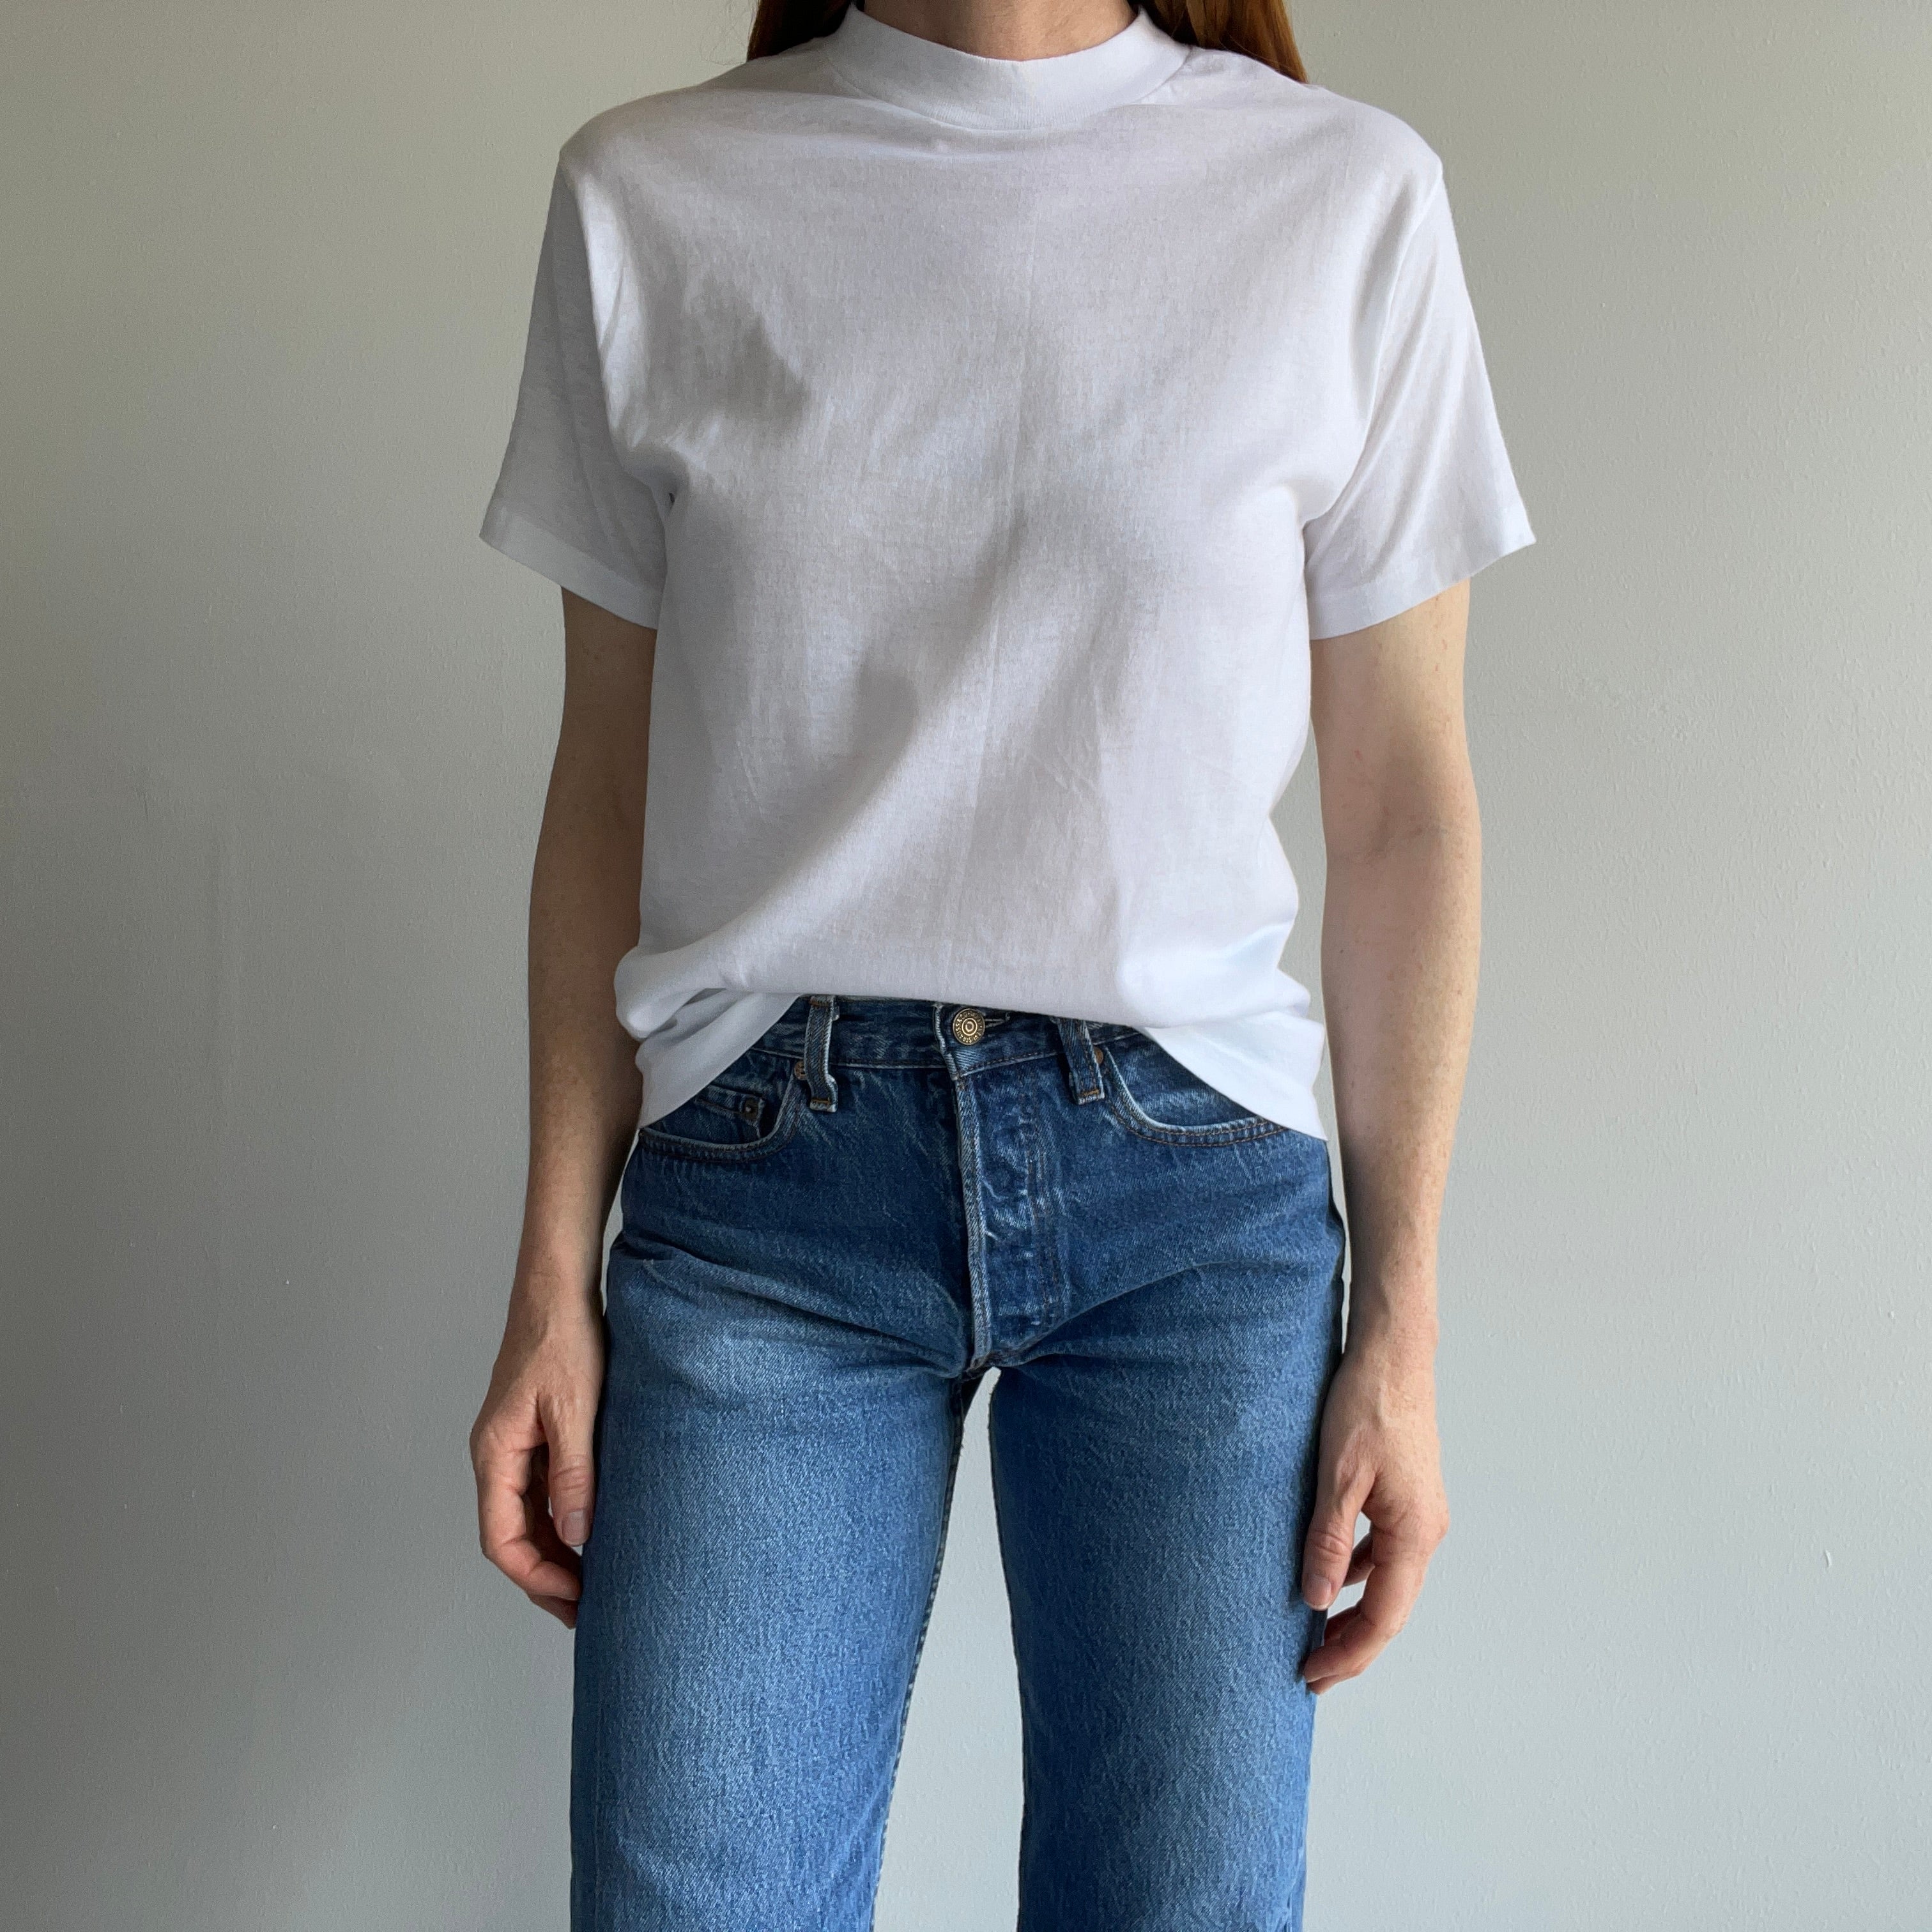 1980s/90s Blank White T-Shirt - Single Stitch, Lovely